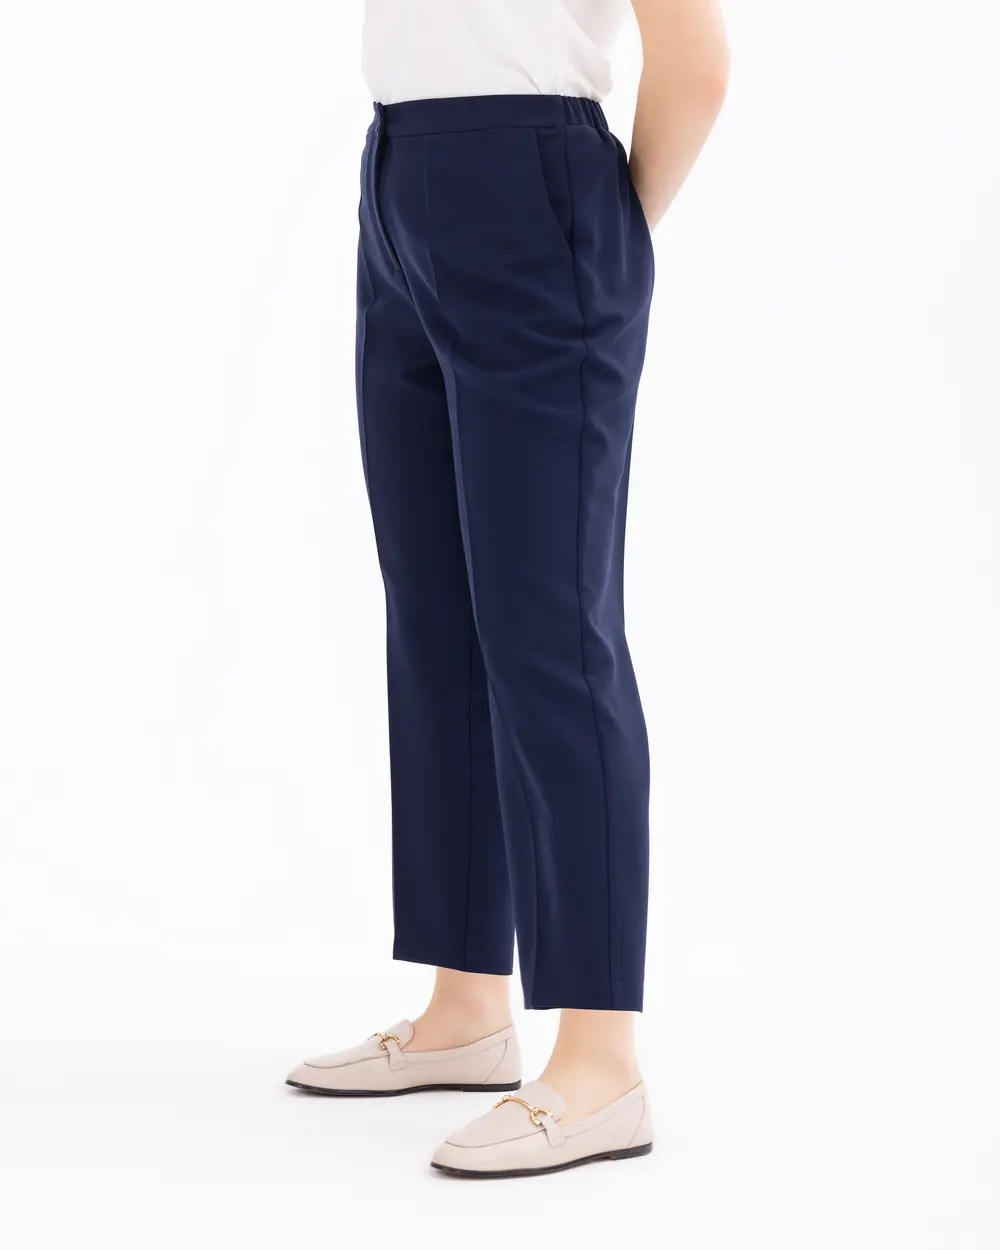 Plus Size Elastic Waist Classic Pants with Pockets